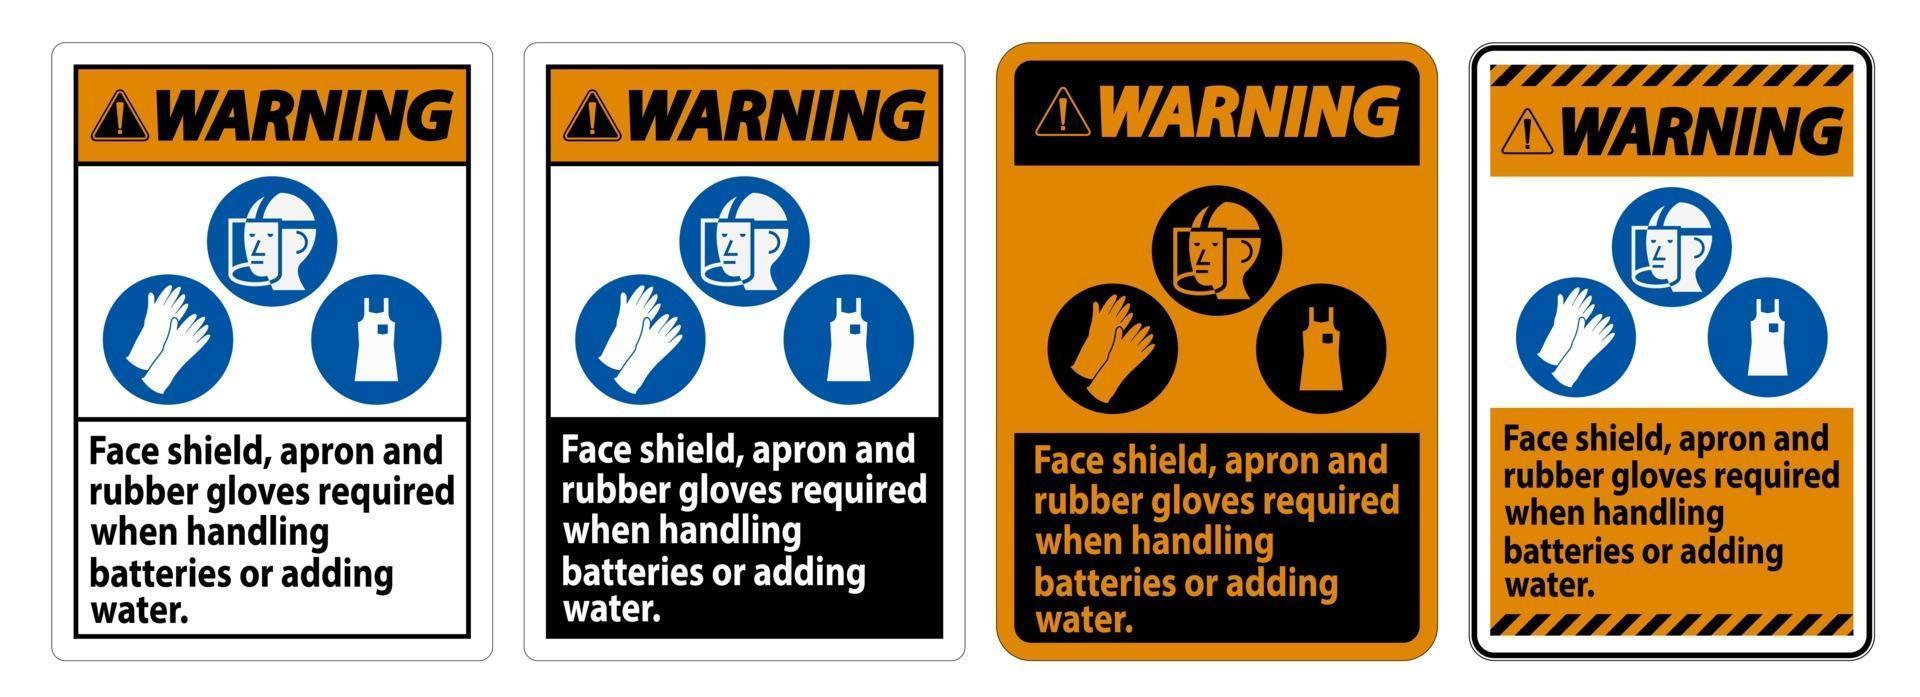 sinal de aviso protetor facial, avental e luvas de borracha obrigatórios conjunto de sinais vetor